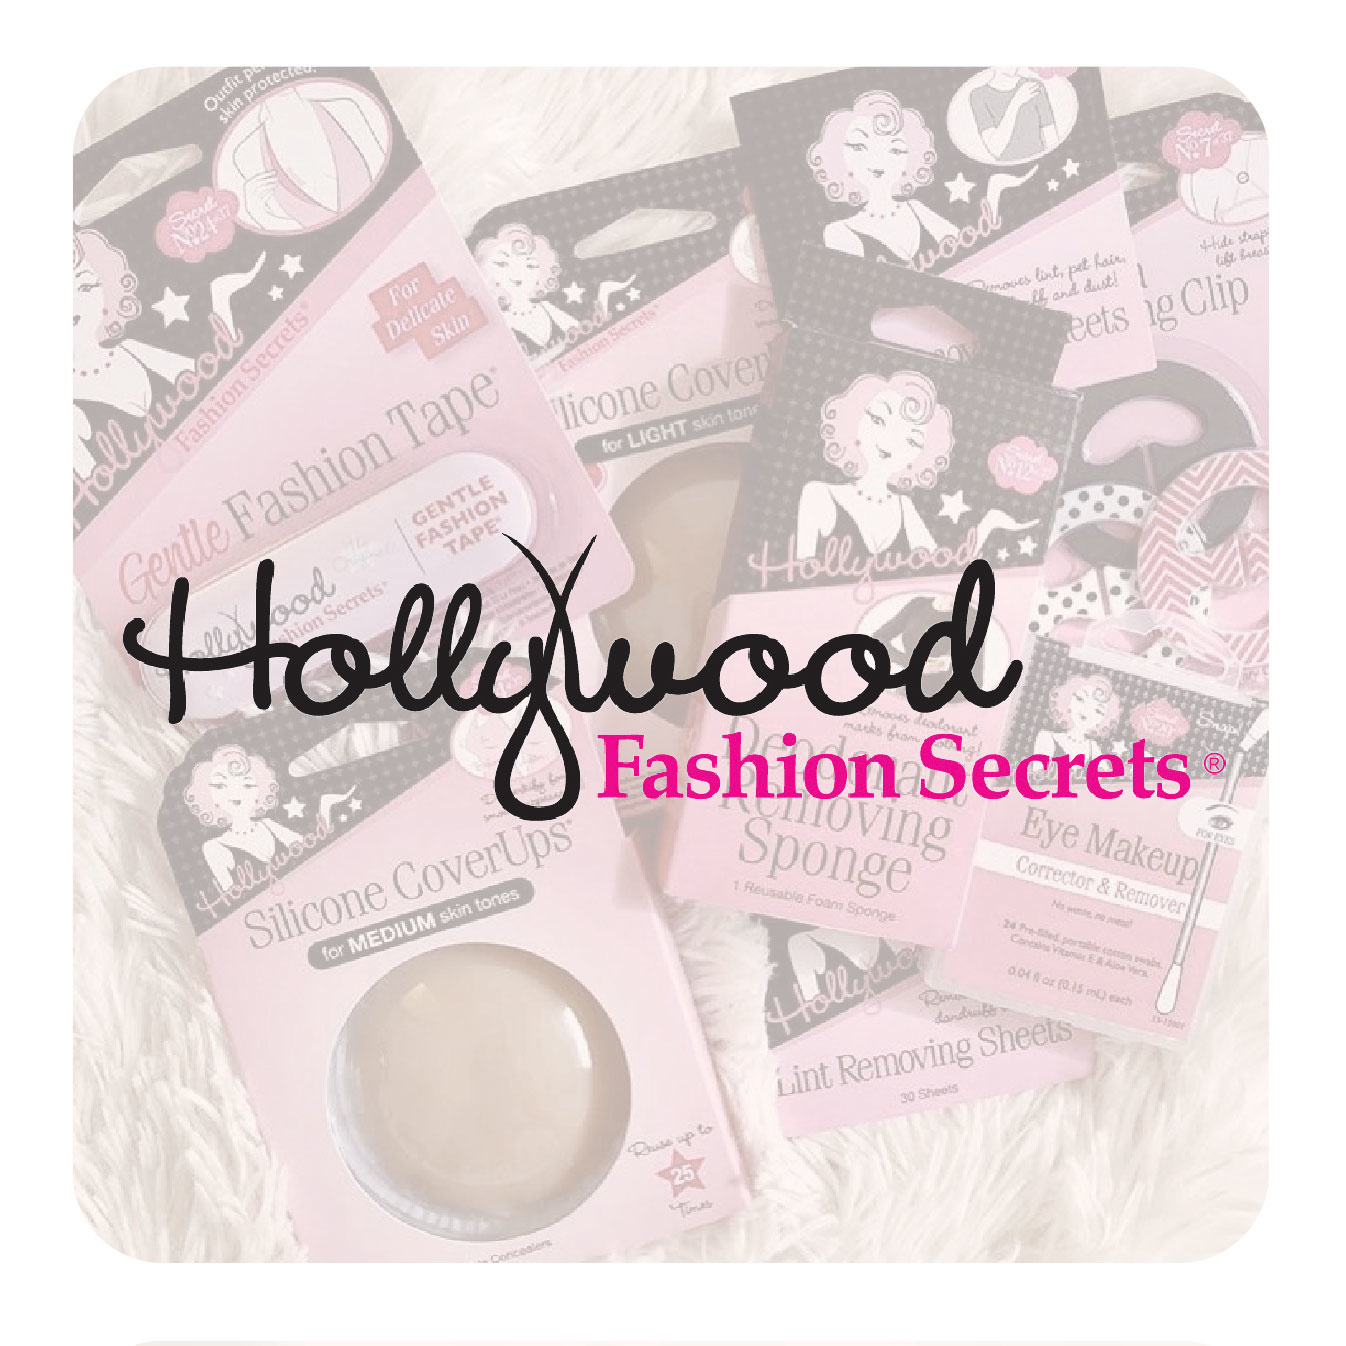 Hollywood Fashion Secrets Gentle Fashion Tape